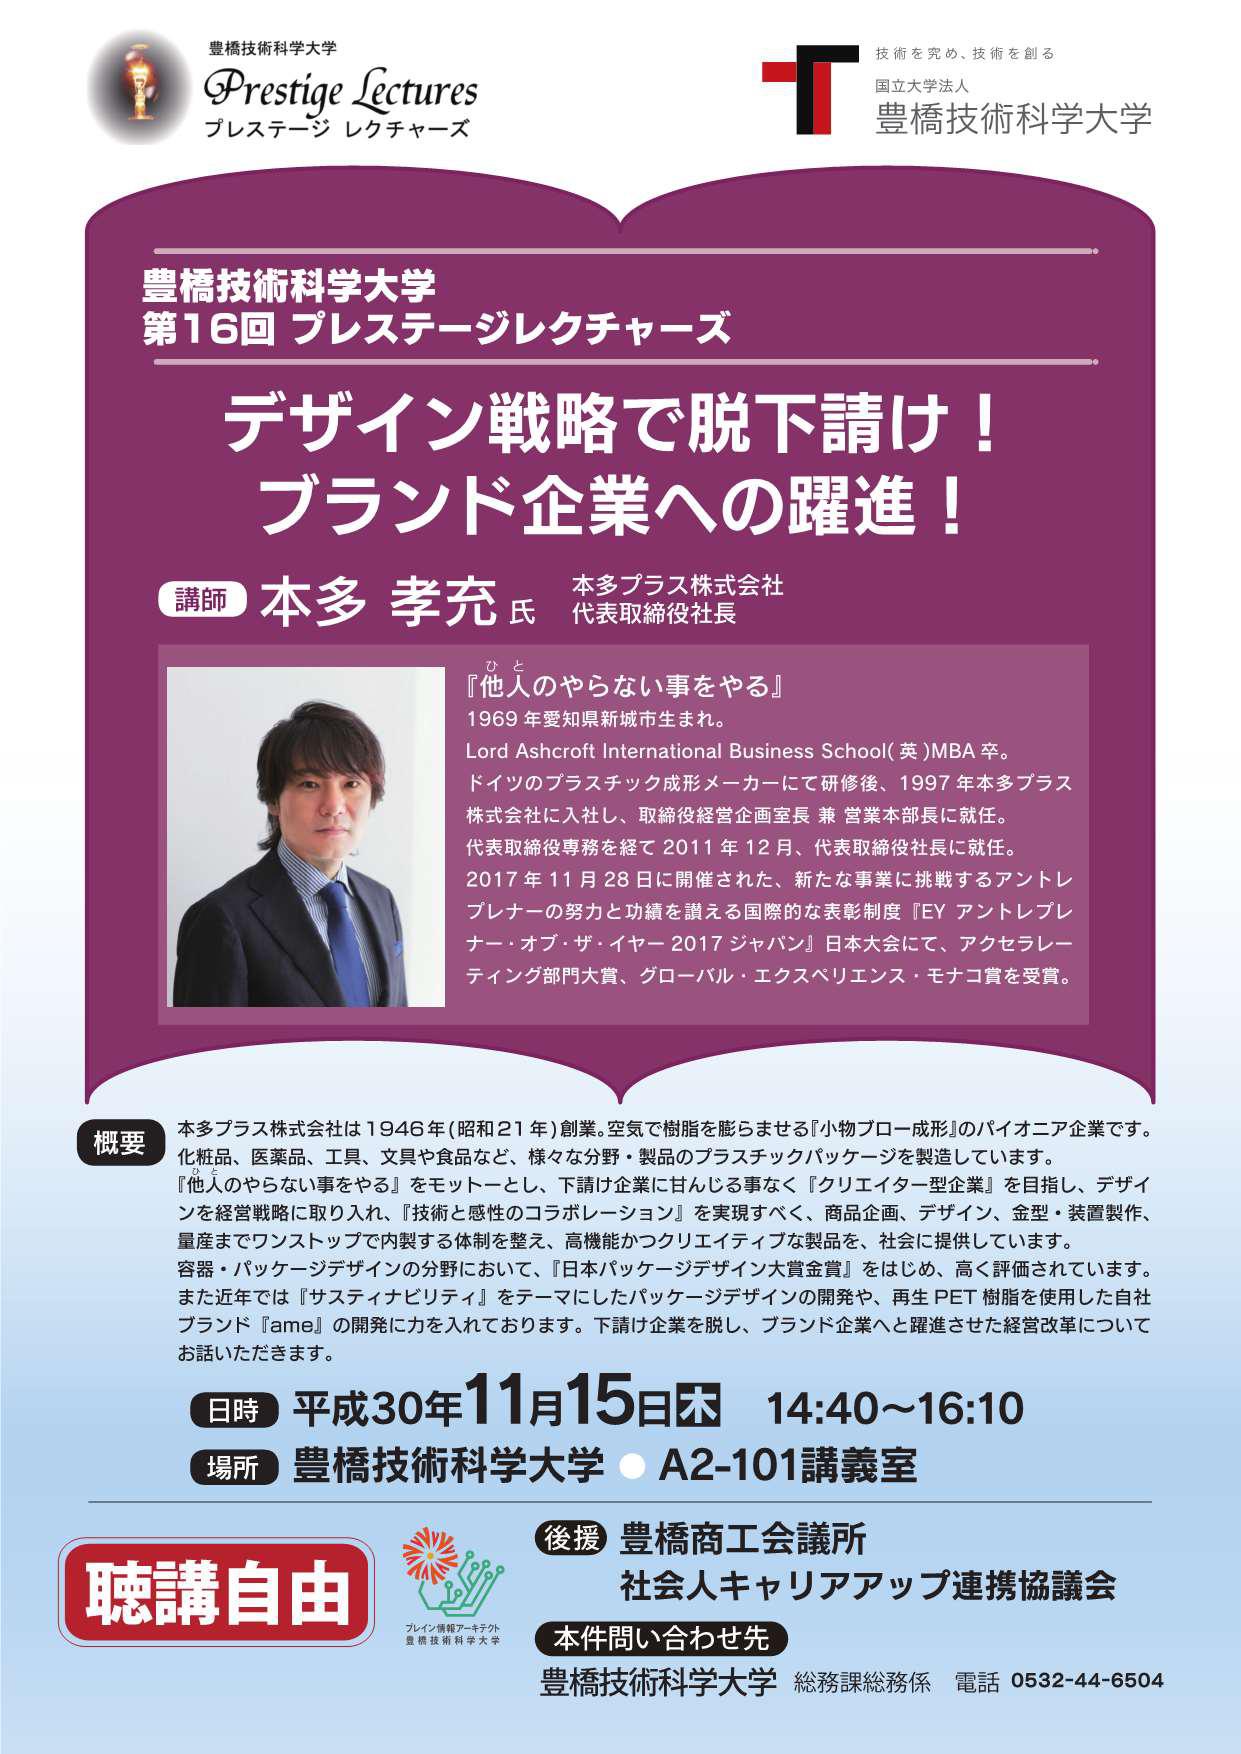 https://www.tut.ac.jp/event/images/181115pure.jpg